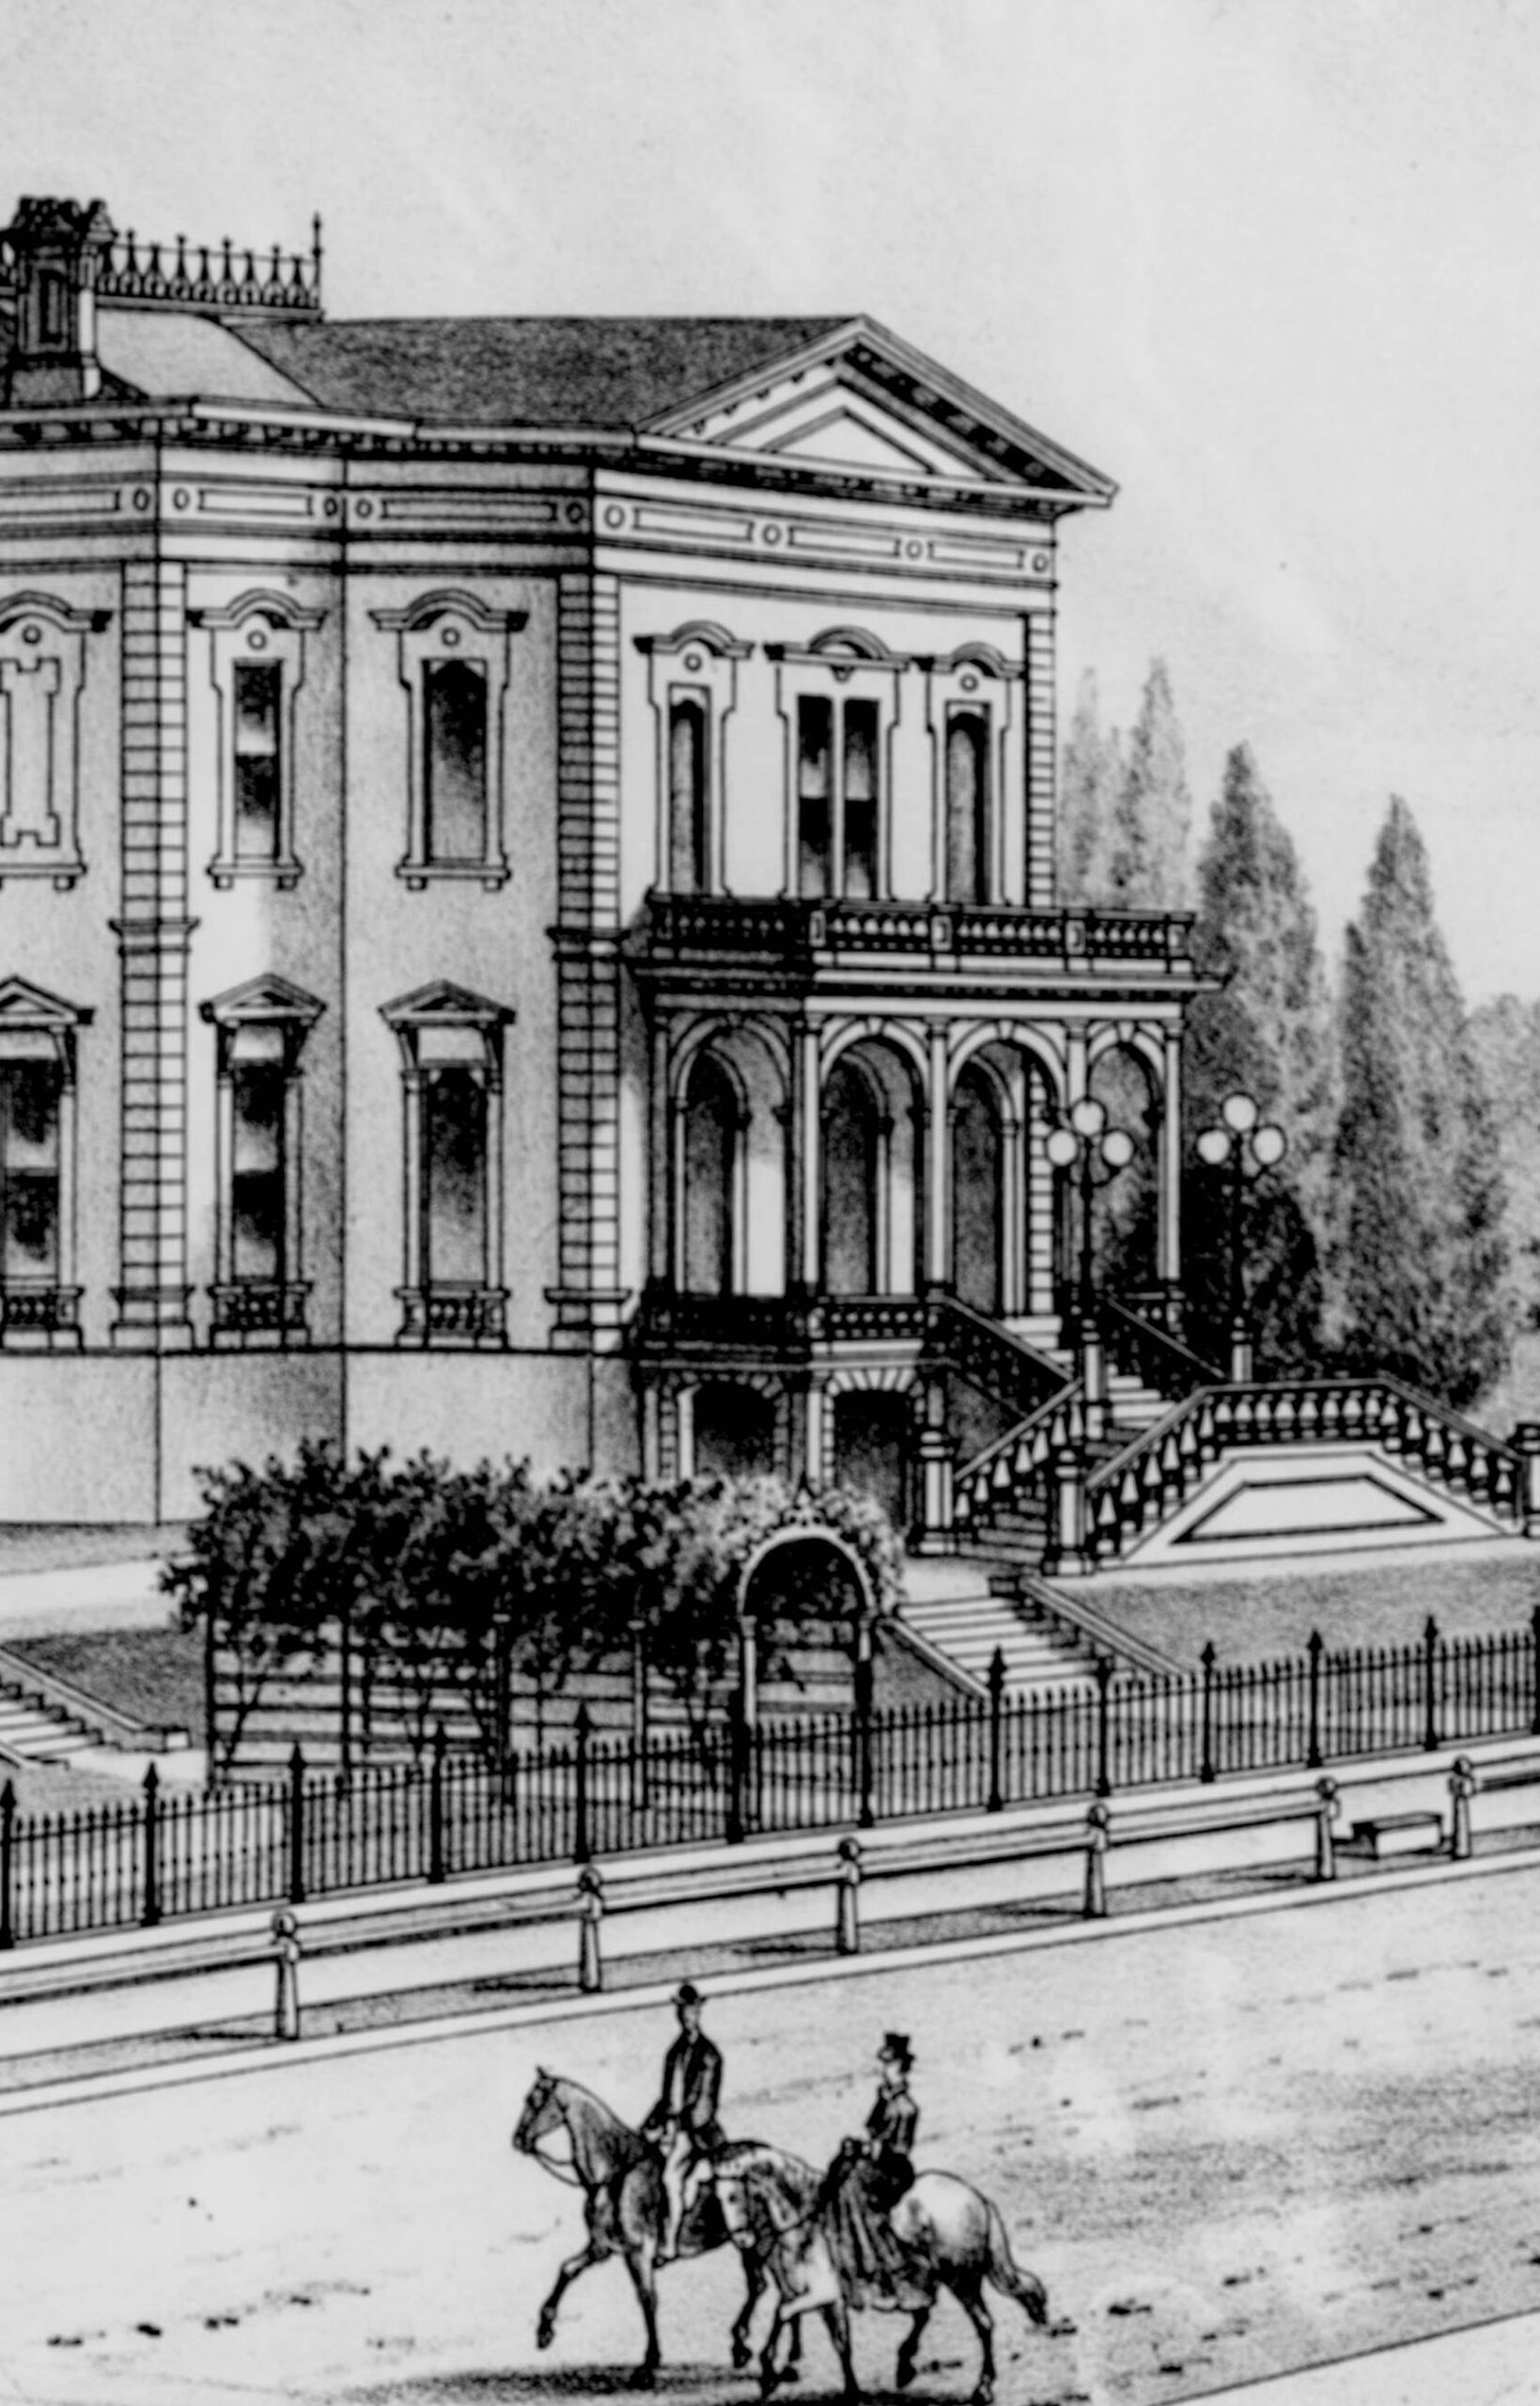 Wells Fargo Express Building, 1870s